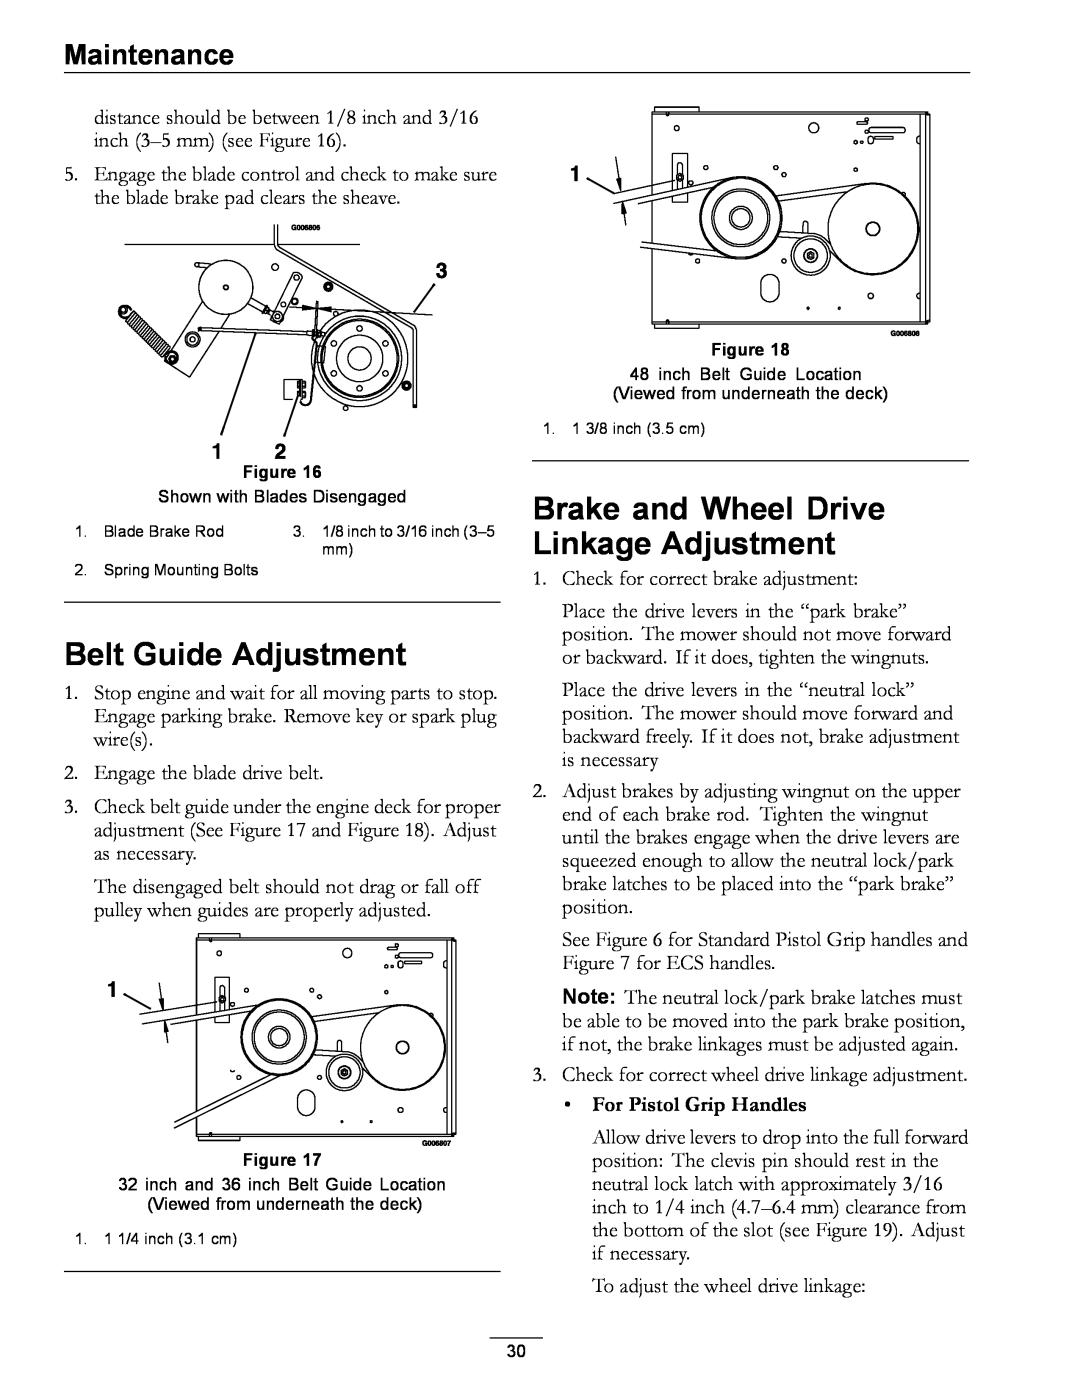 Exmark 850, 00 & Higher manual Belt Guide Adjustment, Brake and Wheel Drive Linkage Adjustment, Maintenance 